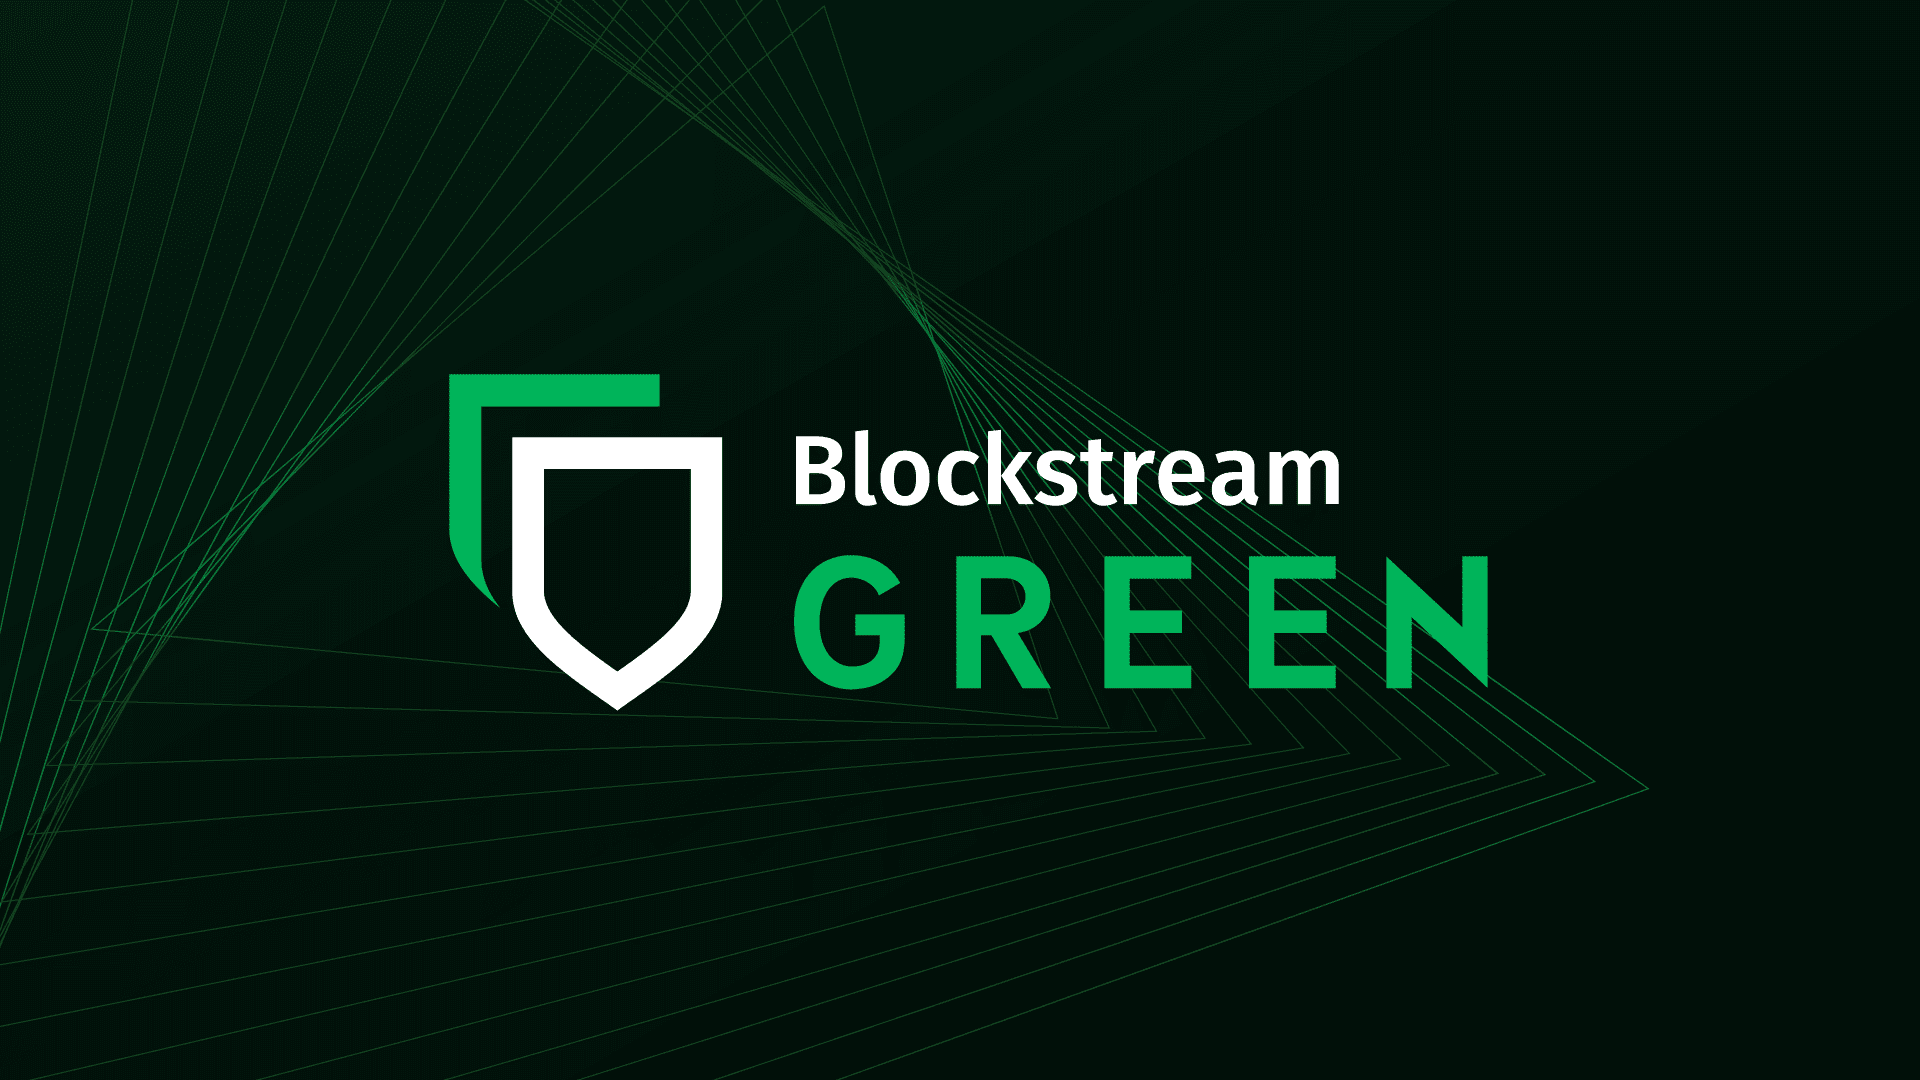 Blockstream Green